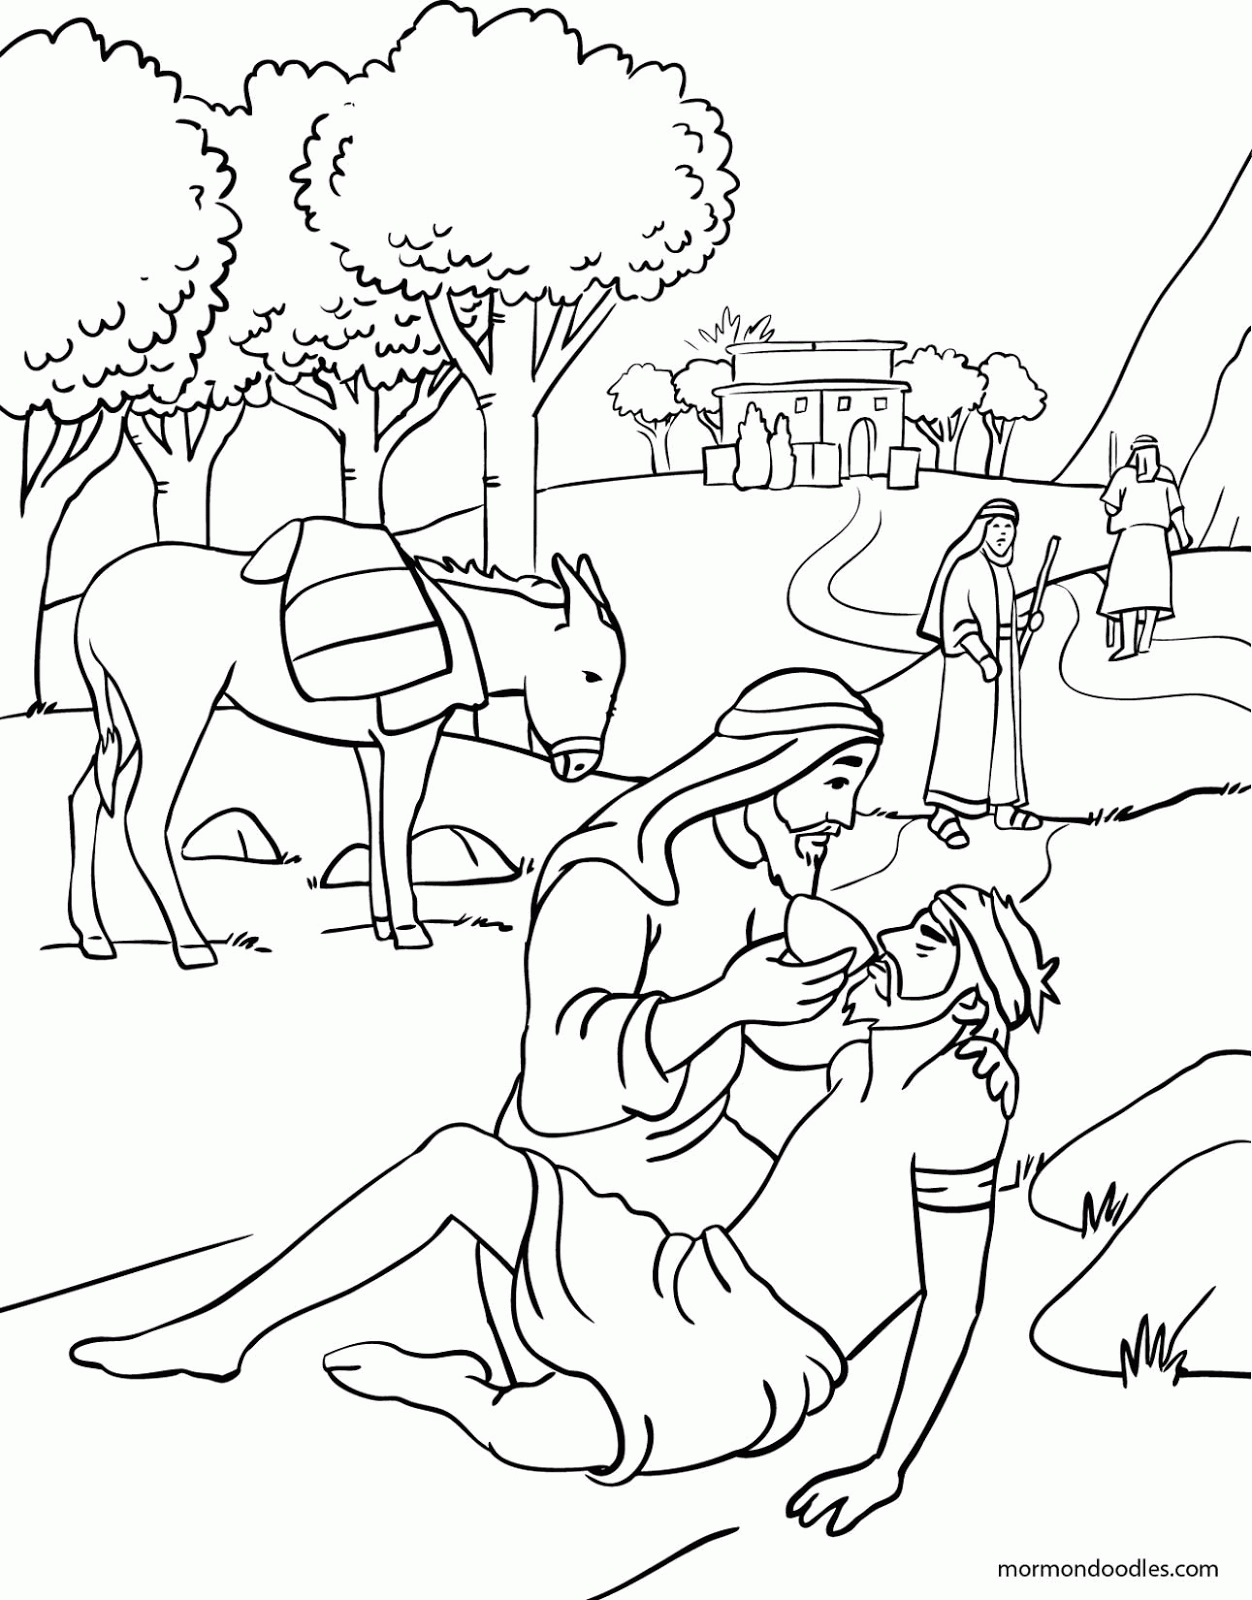 Mormon Doodles: The Good Samaritan Coloring Page